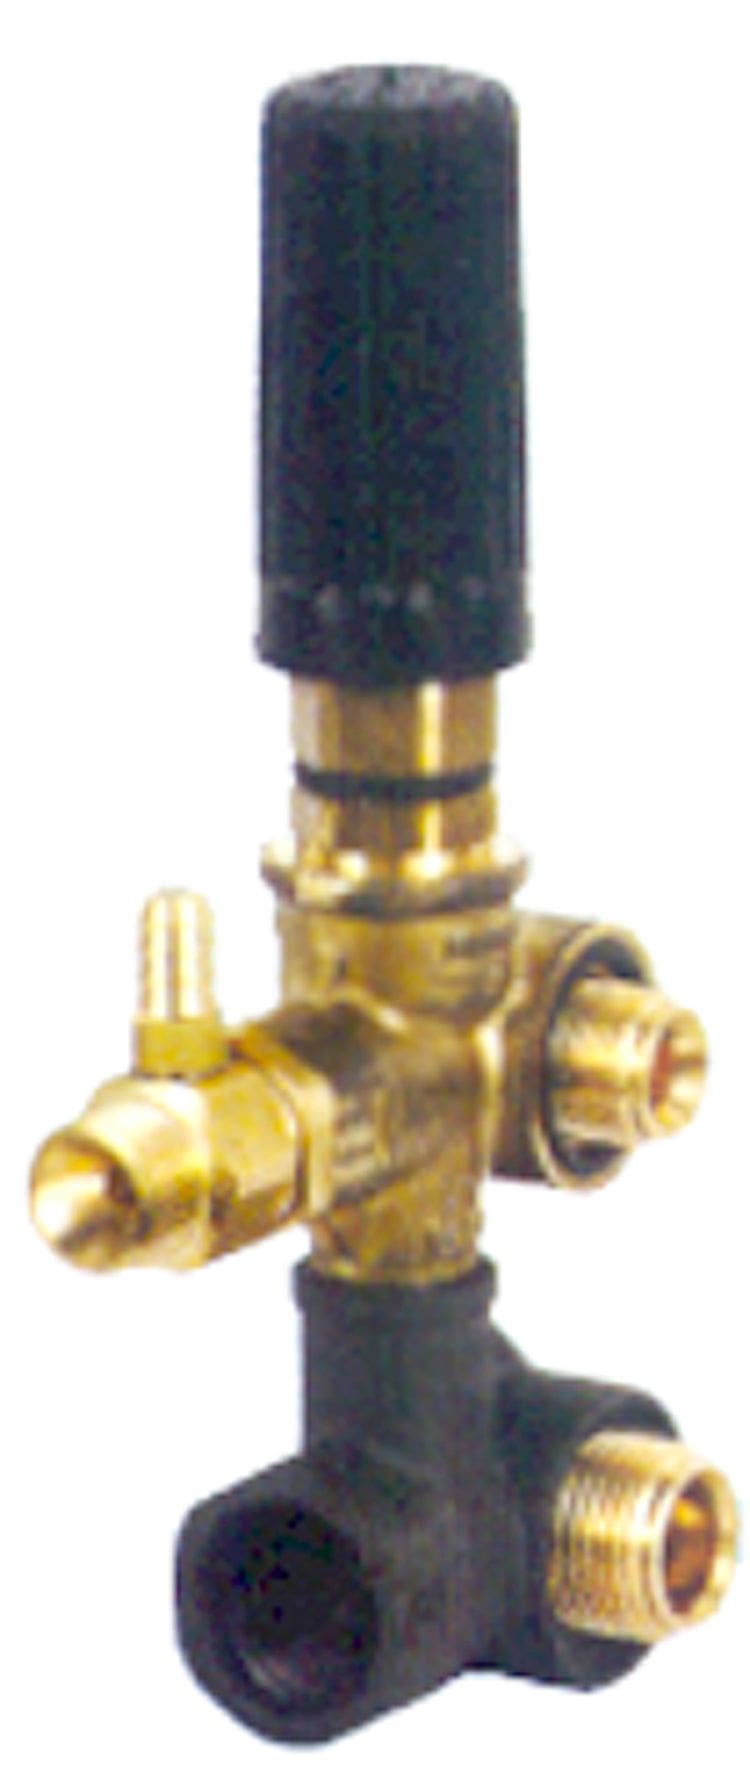 Unloader valve #AR20890